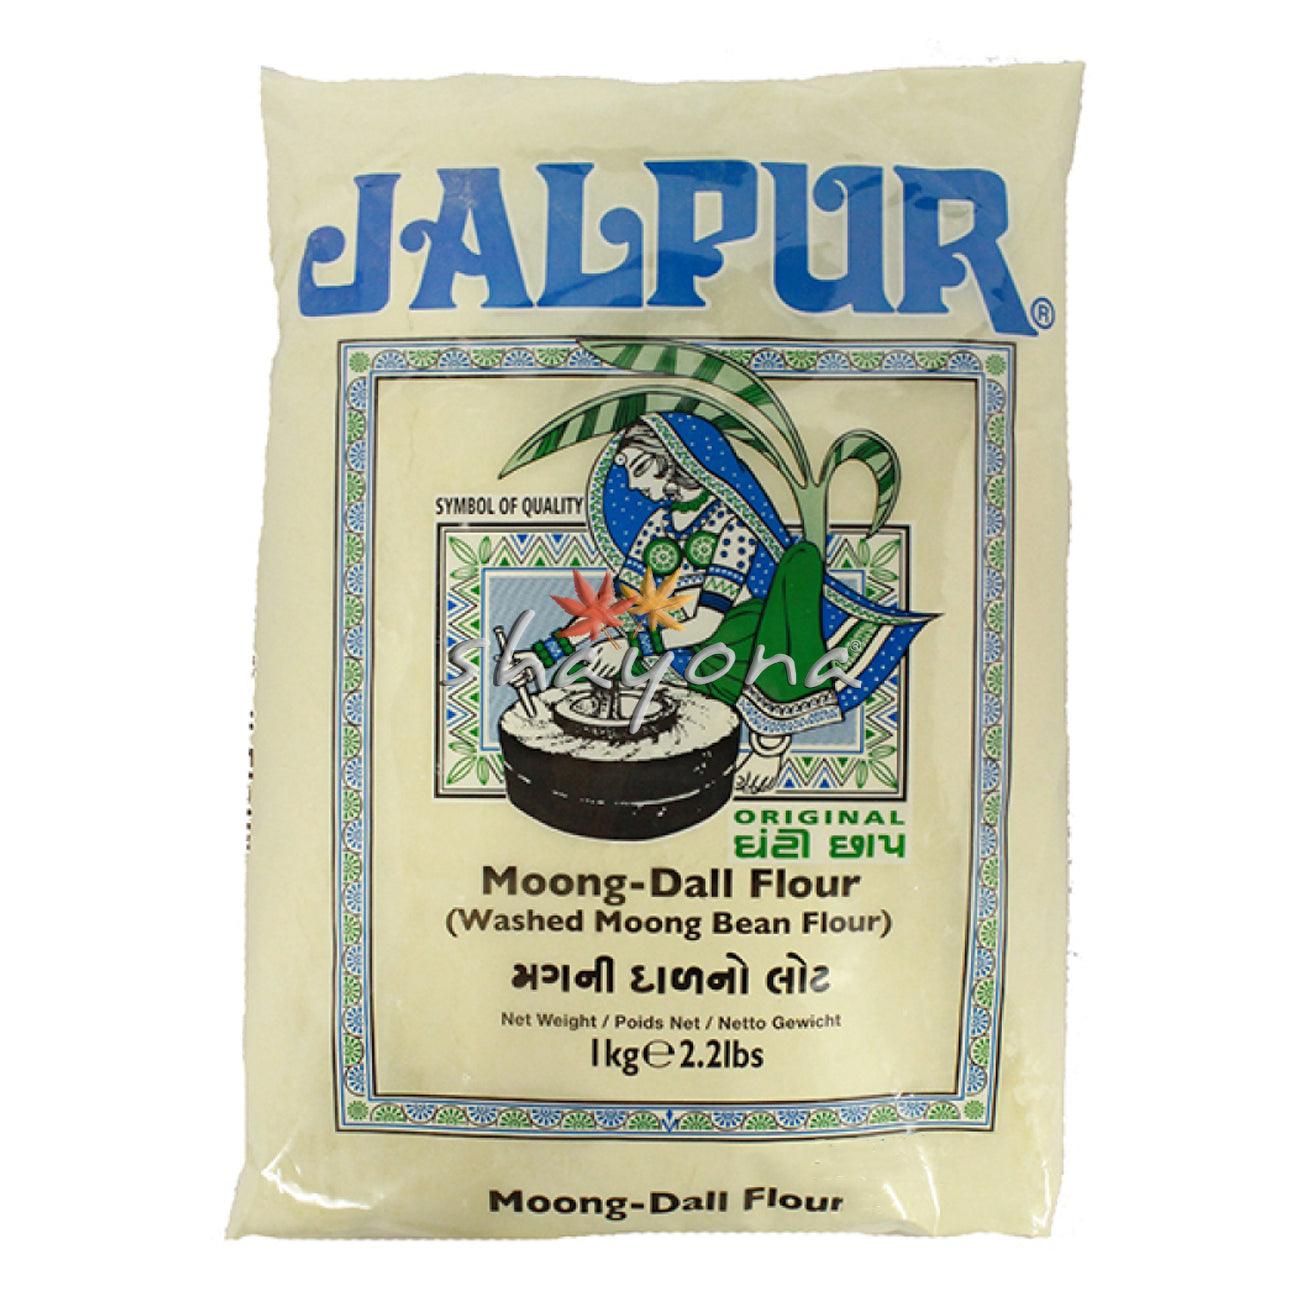 Jalpur Moong Dall Flour - Shayona UK